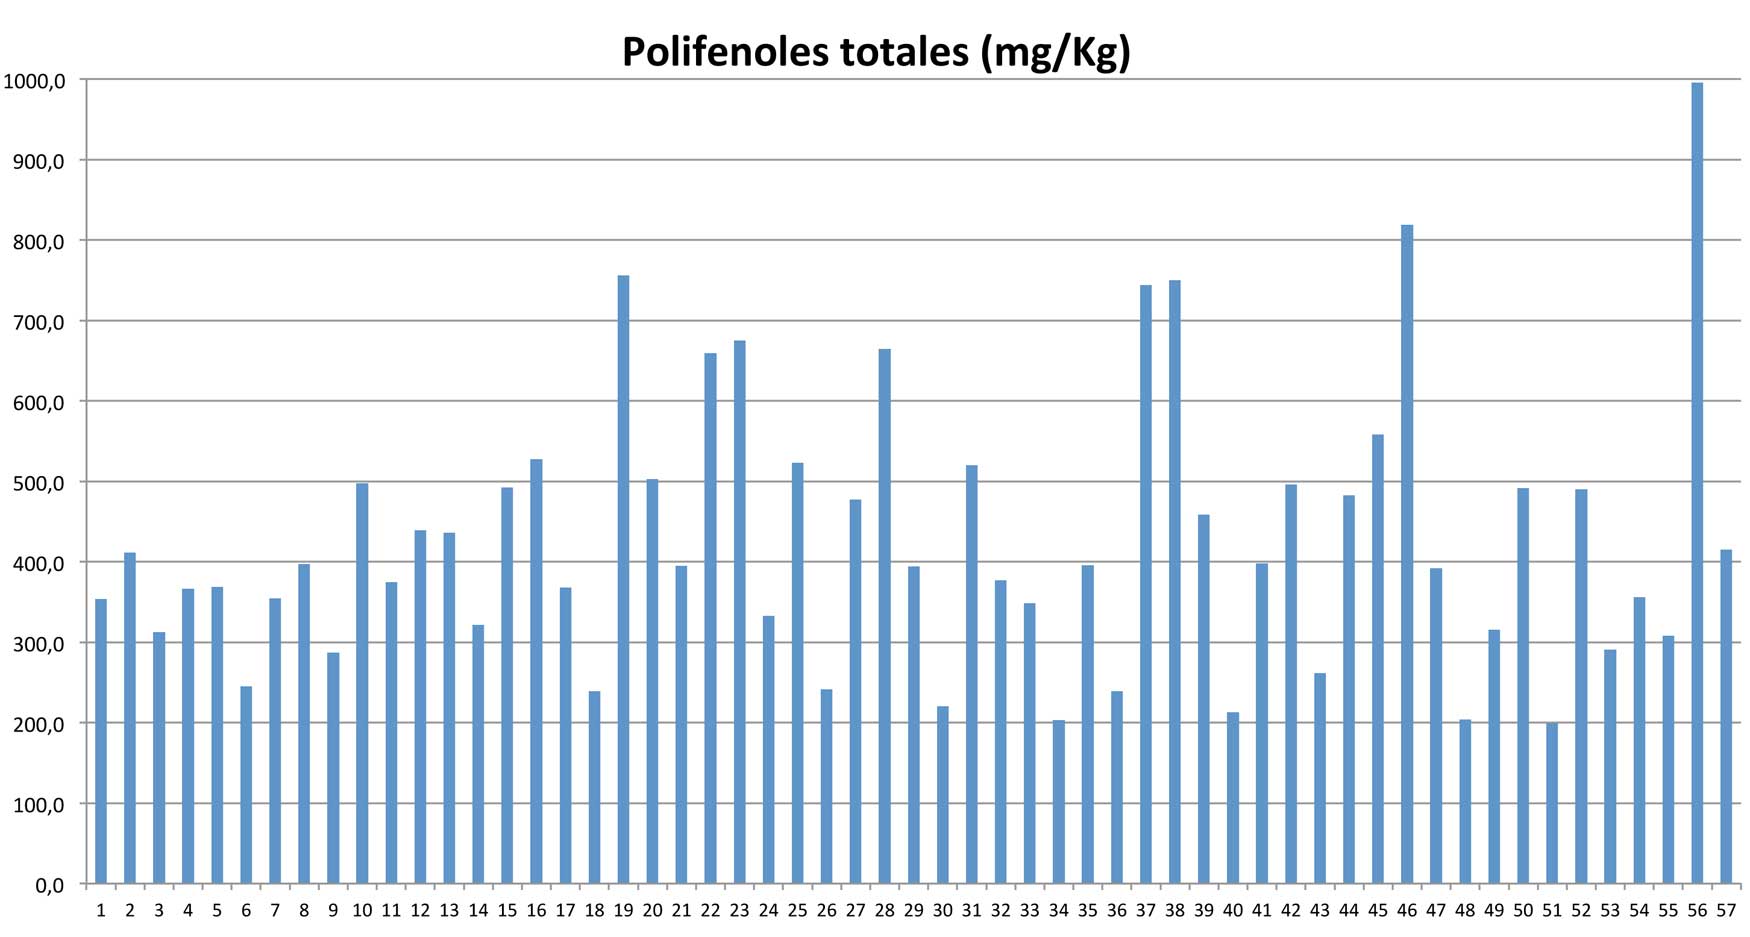 Grfico 1: Polifenoles totales